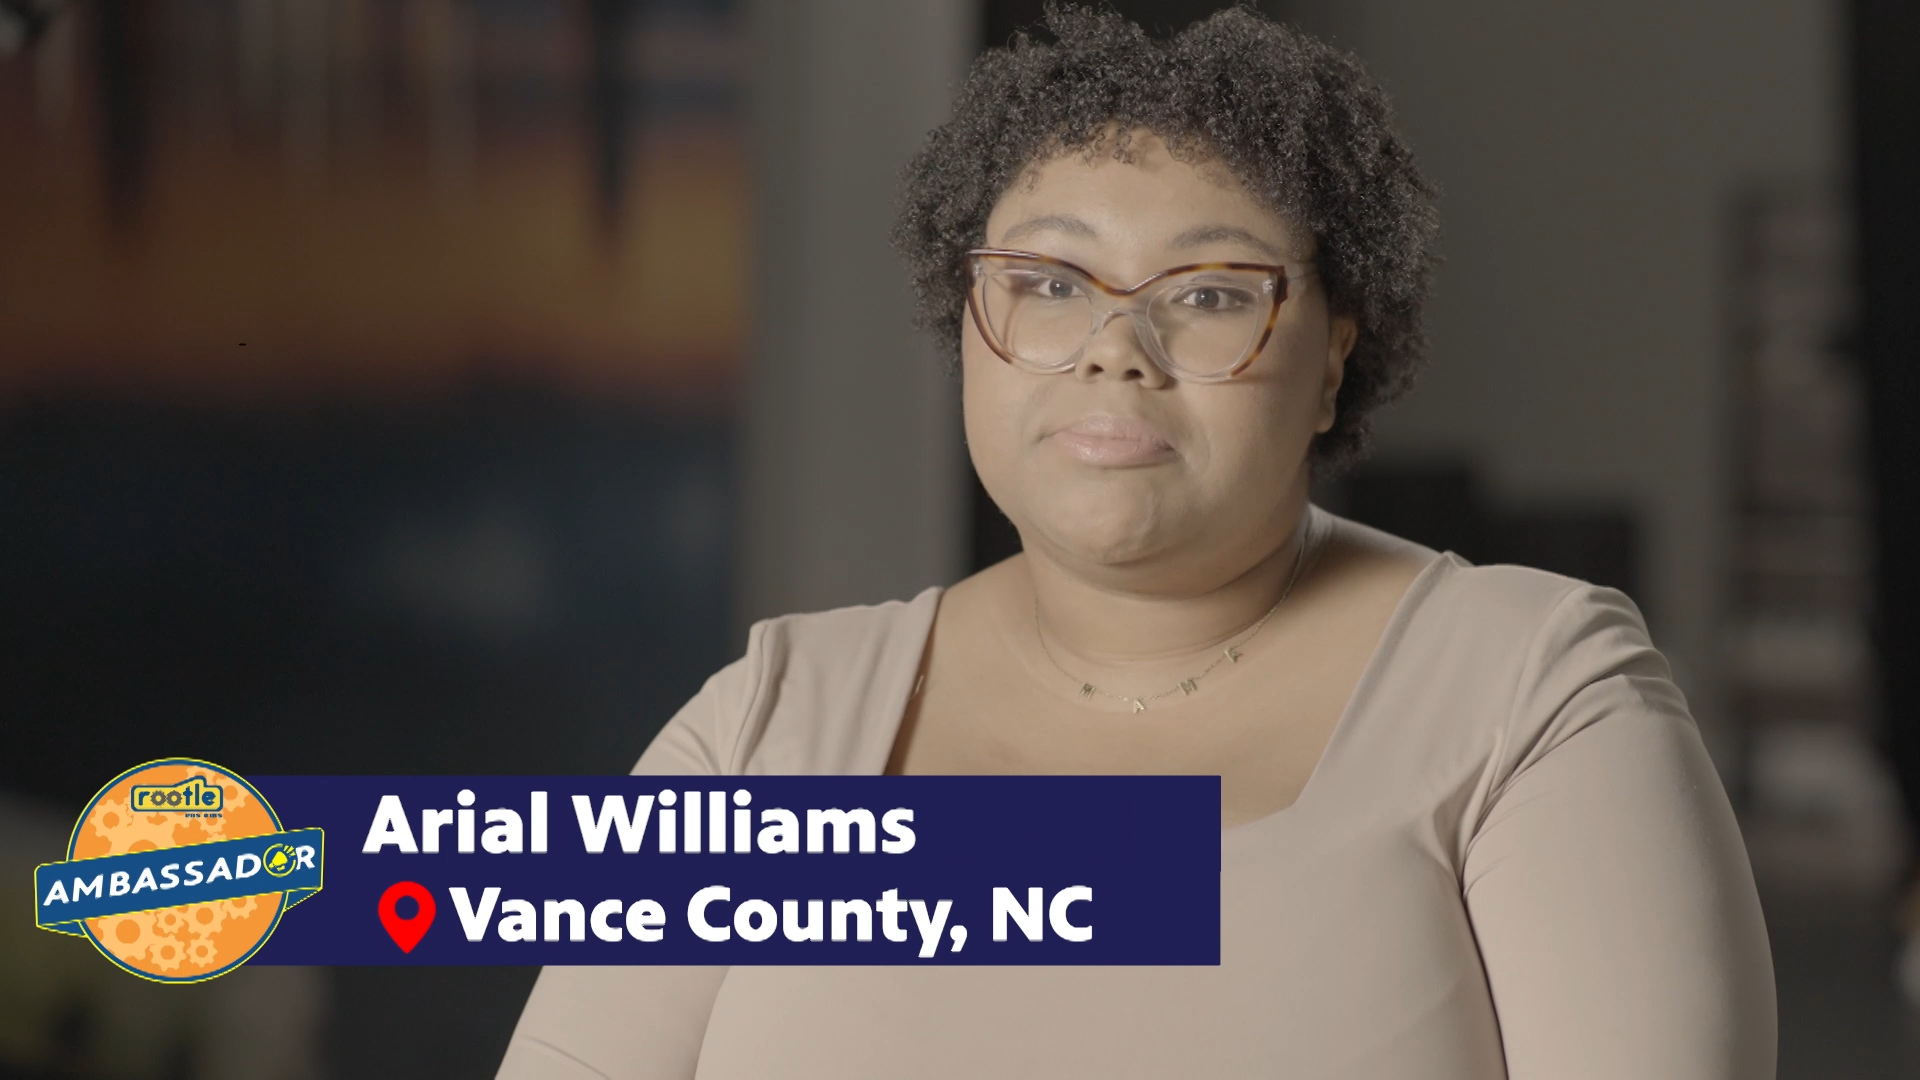 Meet Arial Williams, Vance County Rootle Ambassador